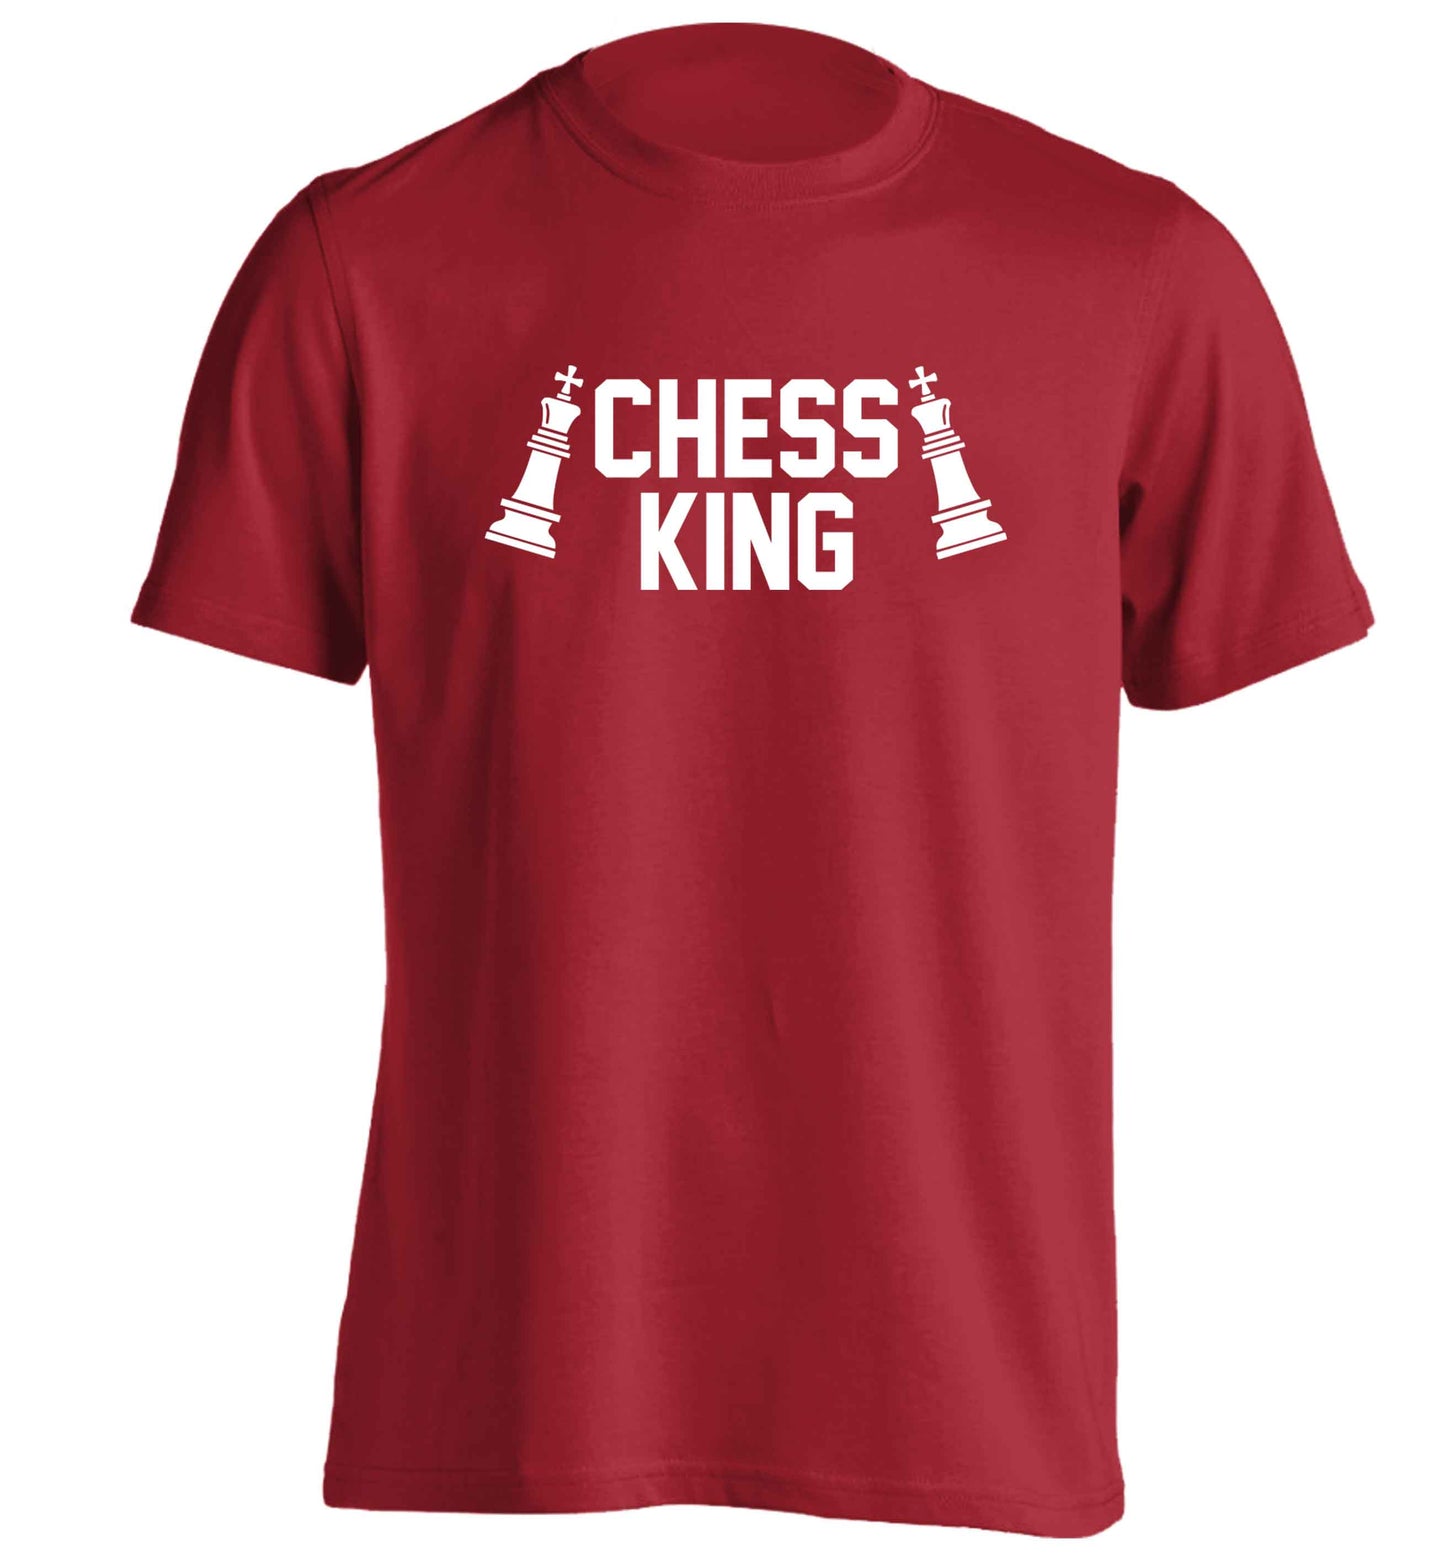 Chess king adults unisex red Tshirt 2XL